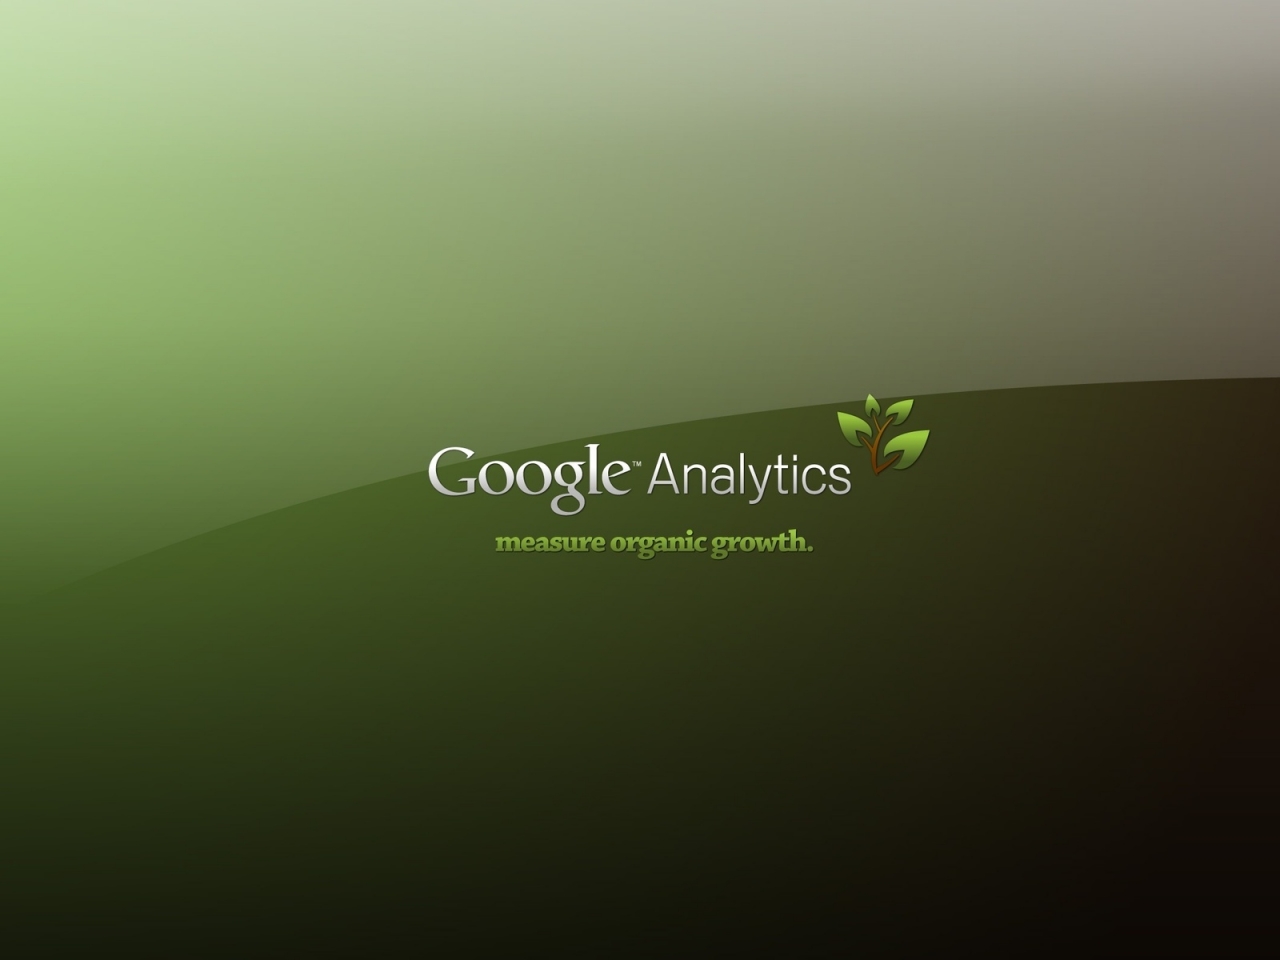 Google Analytics Poster for 1280 x 960 resolution